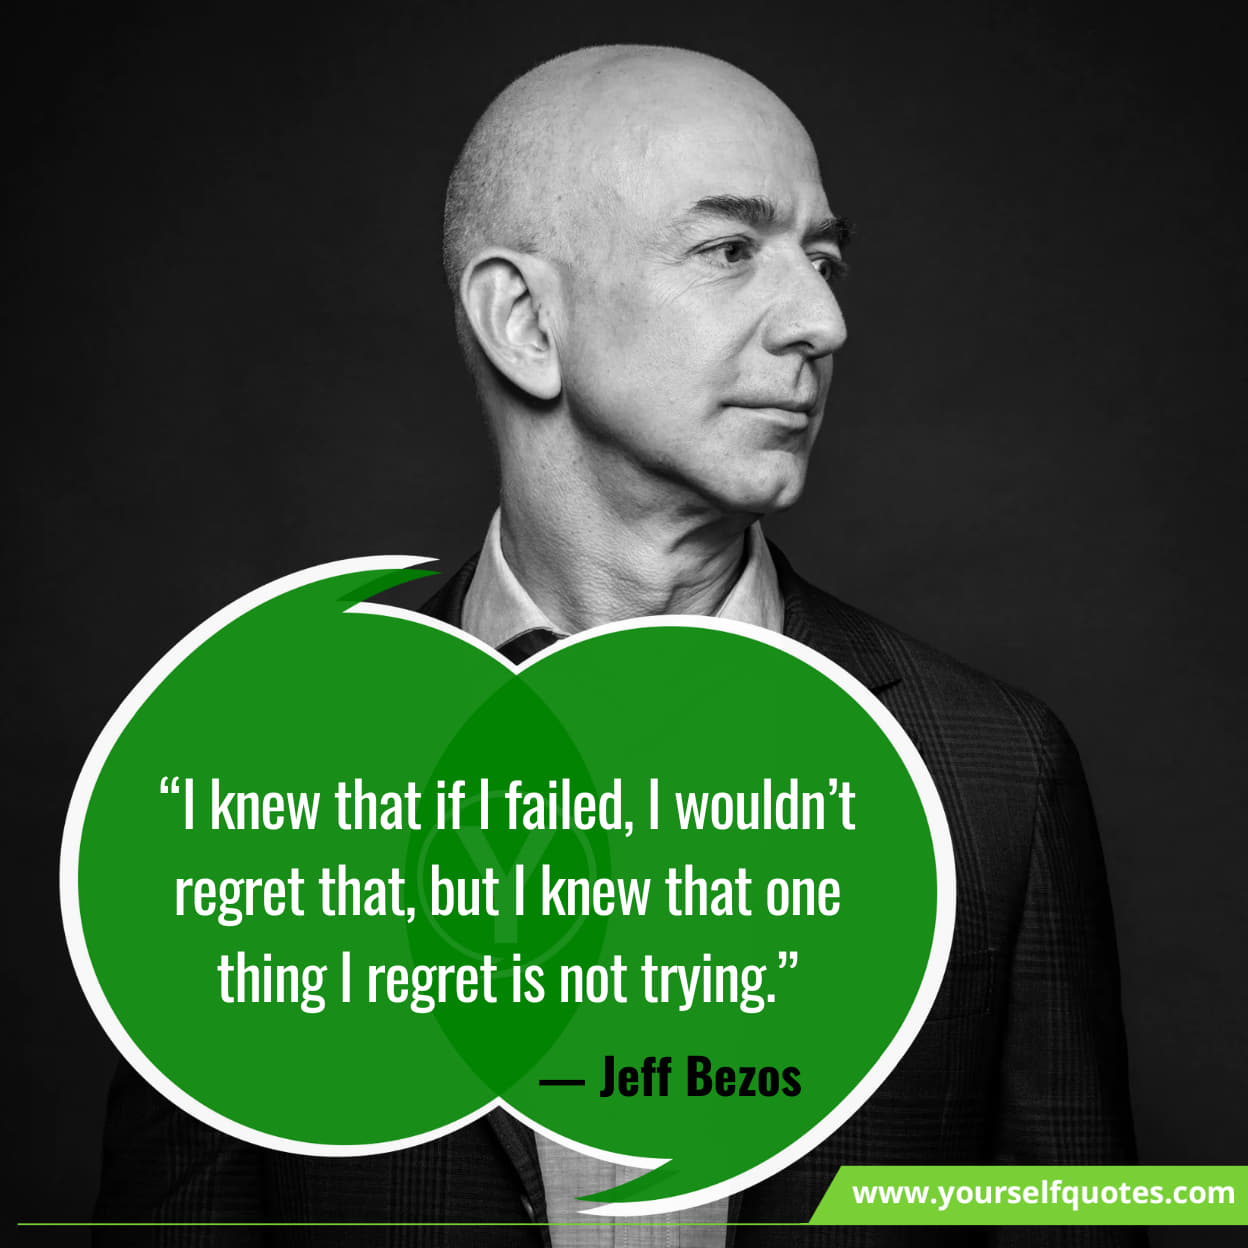 Jeff Bezos Quotes On Success